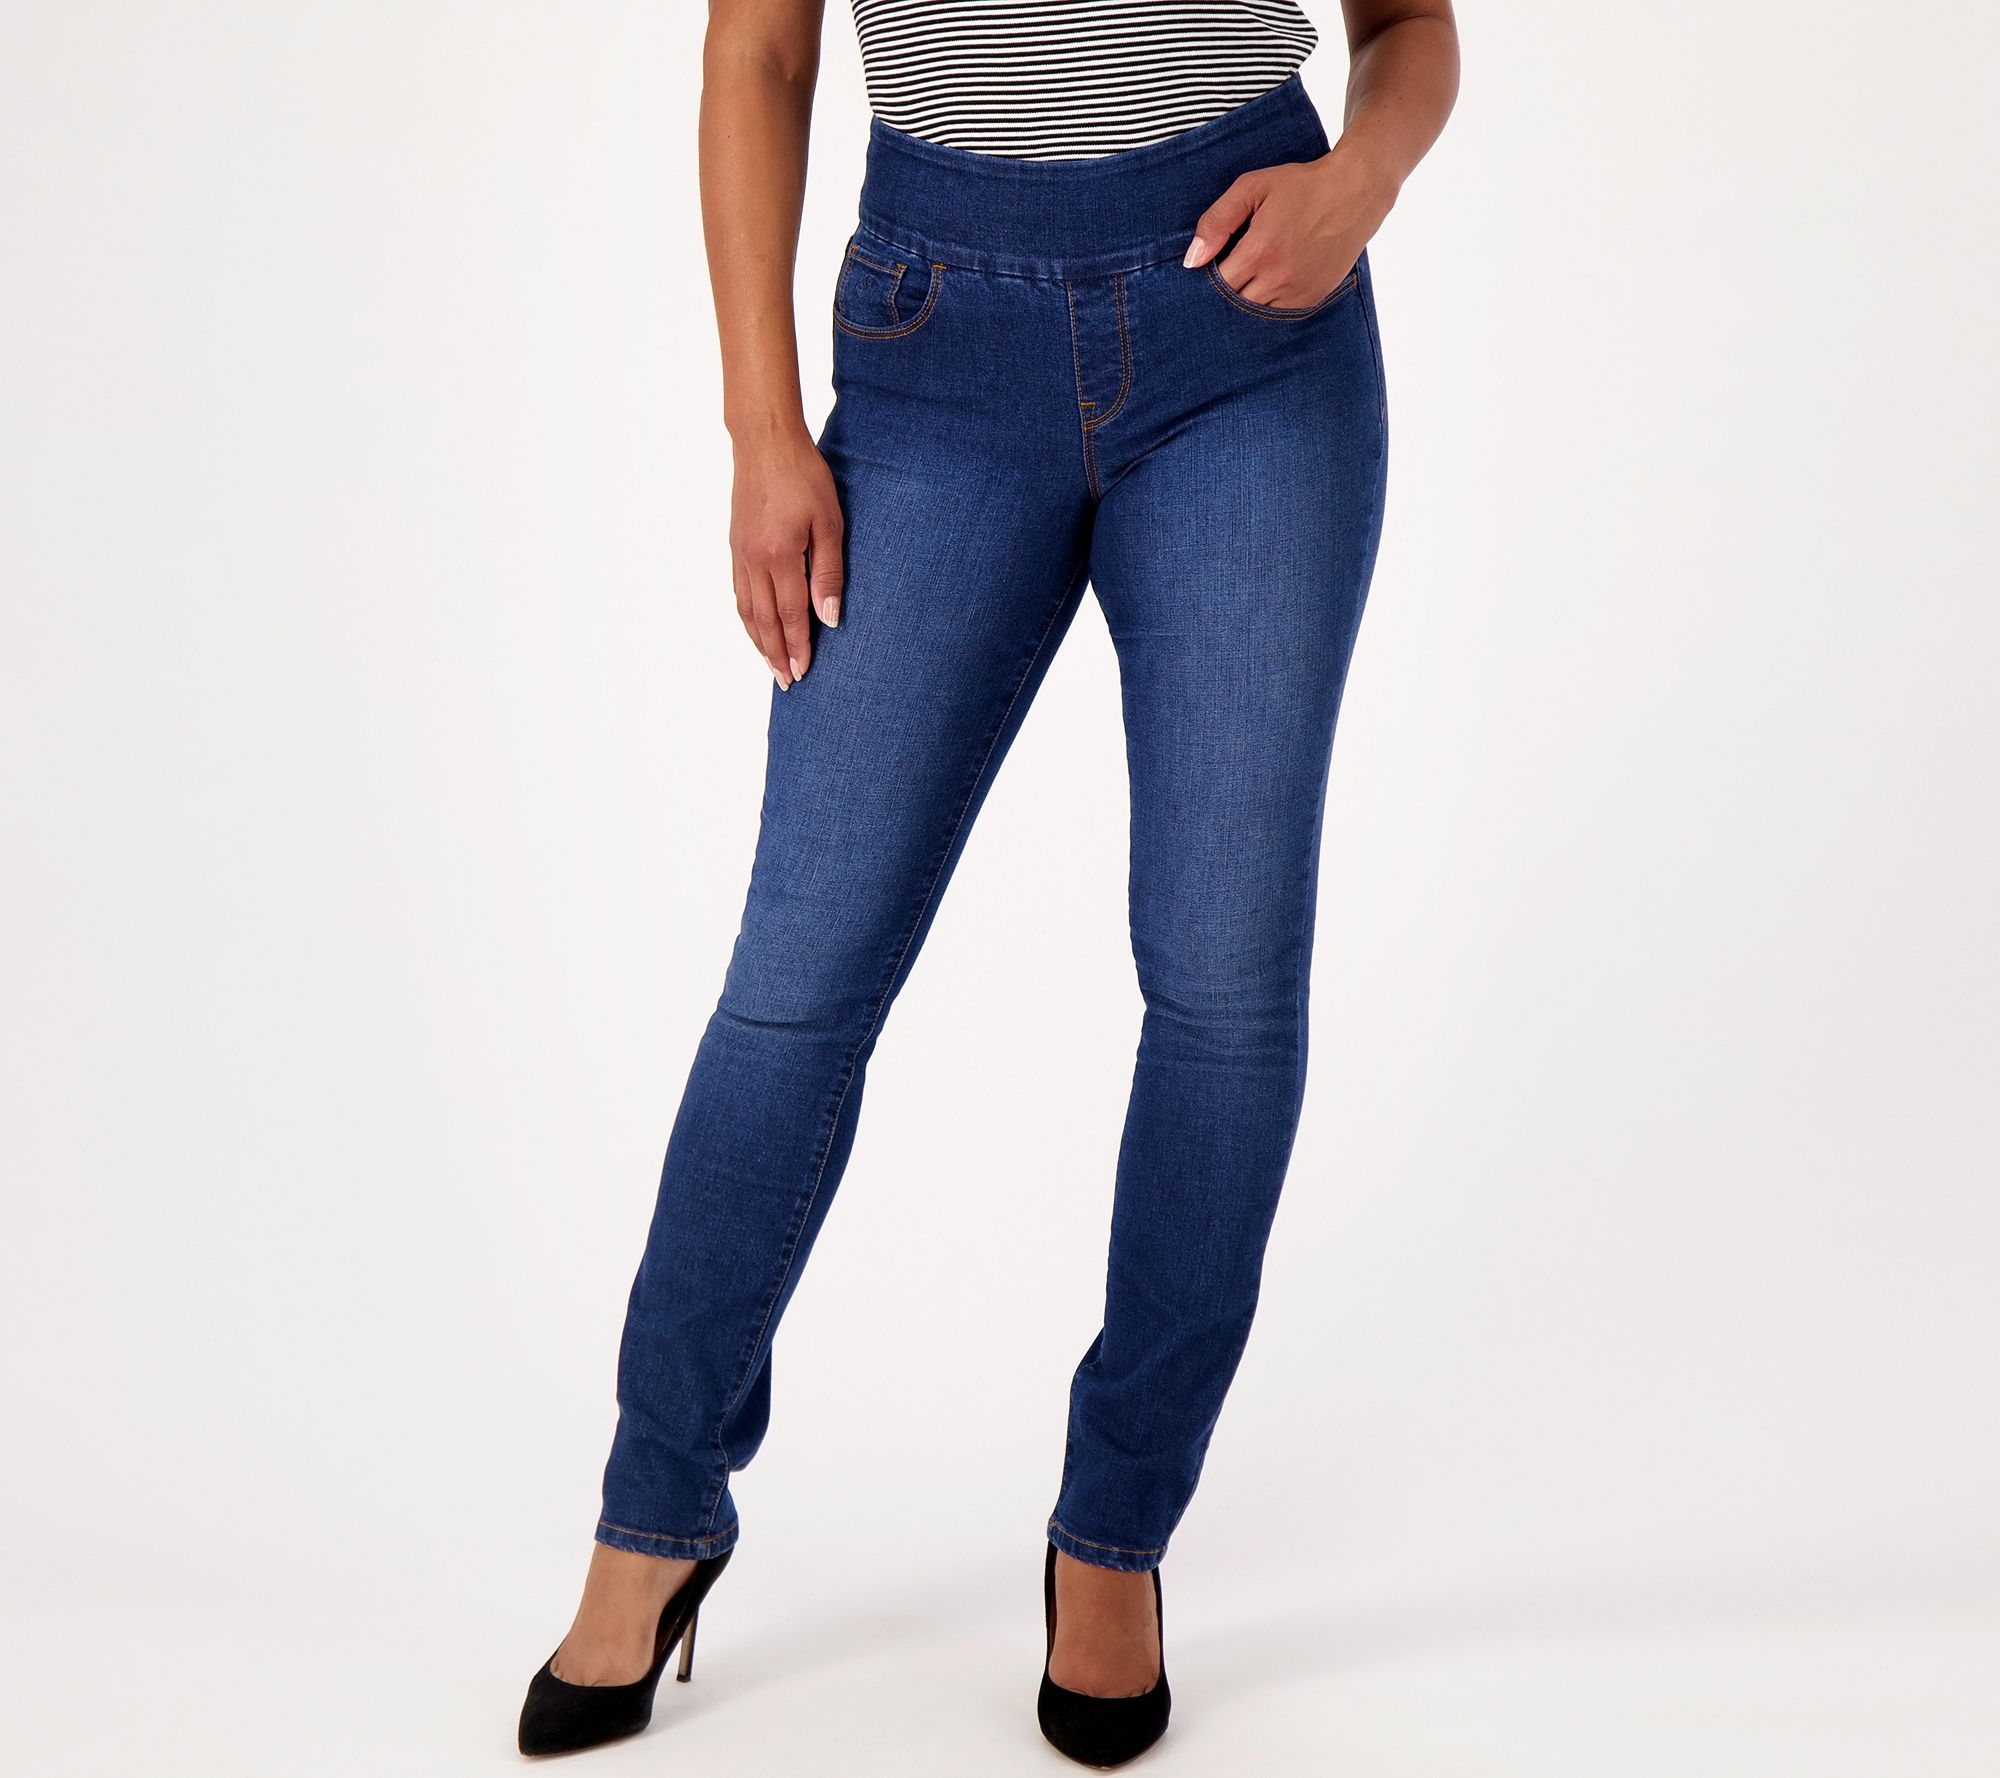 Gloria Vanderbilt Black Pants Size 14 — Family Tree Resale 1